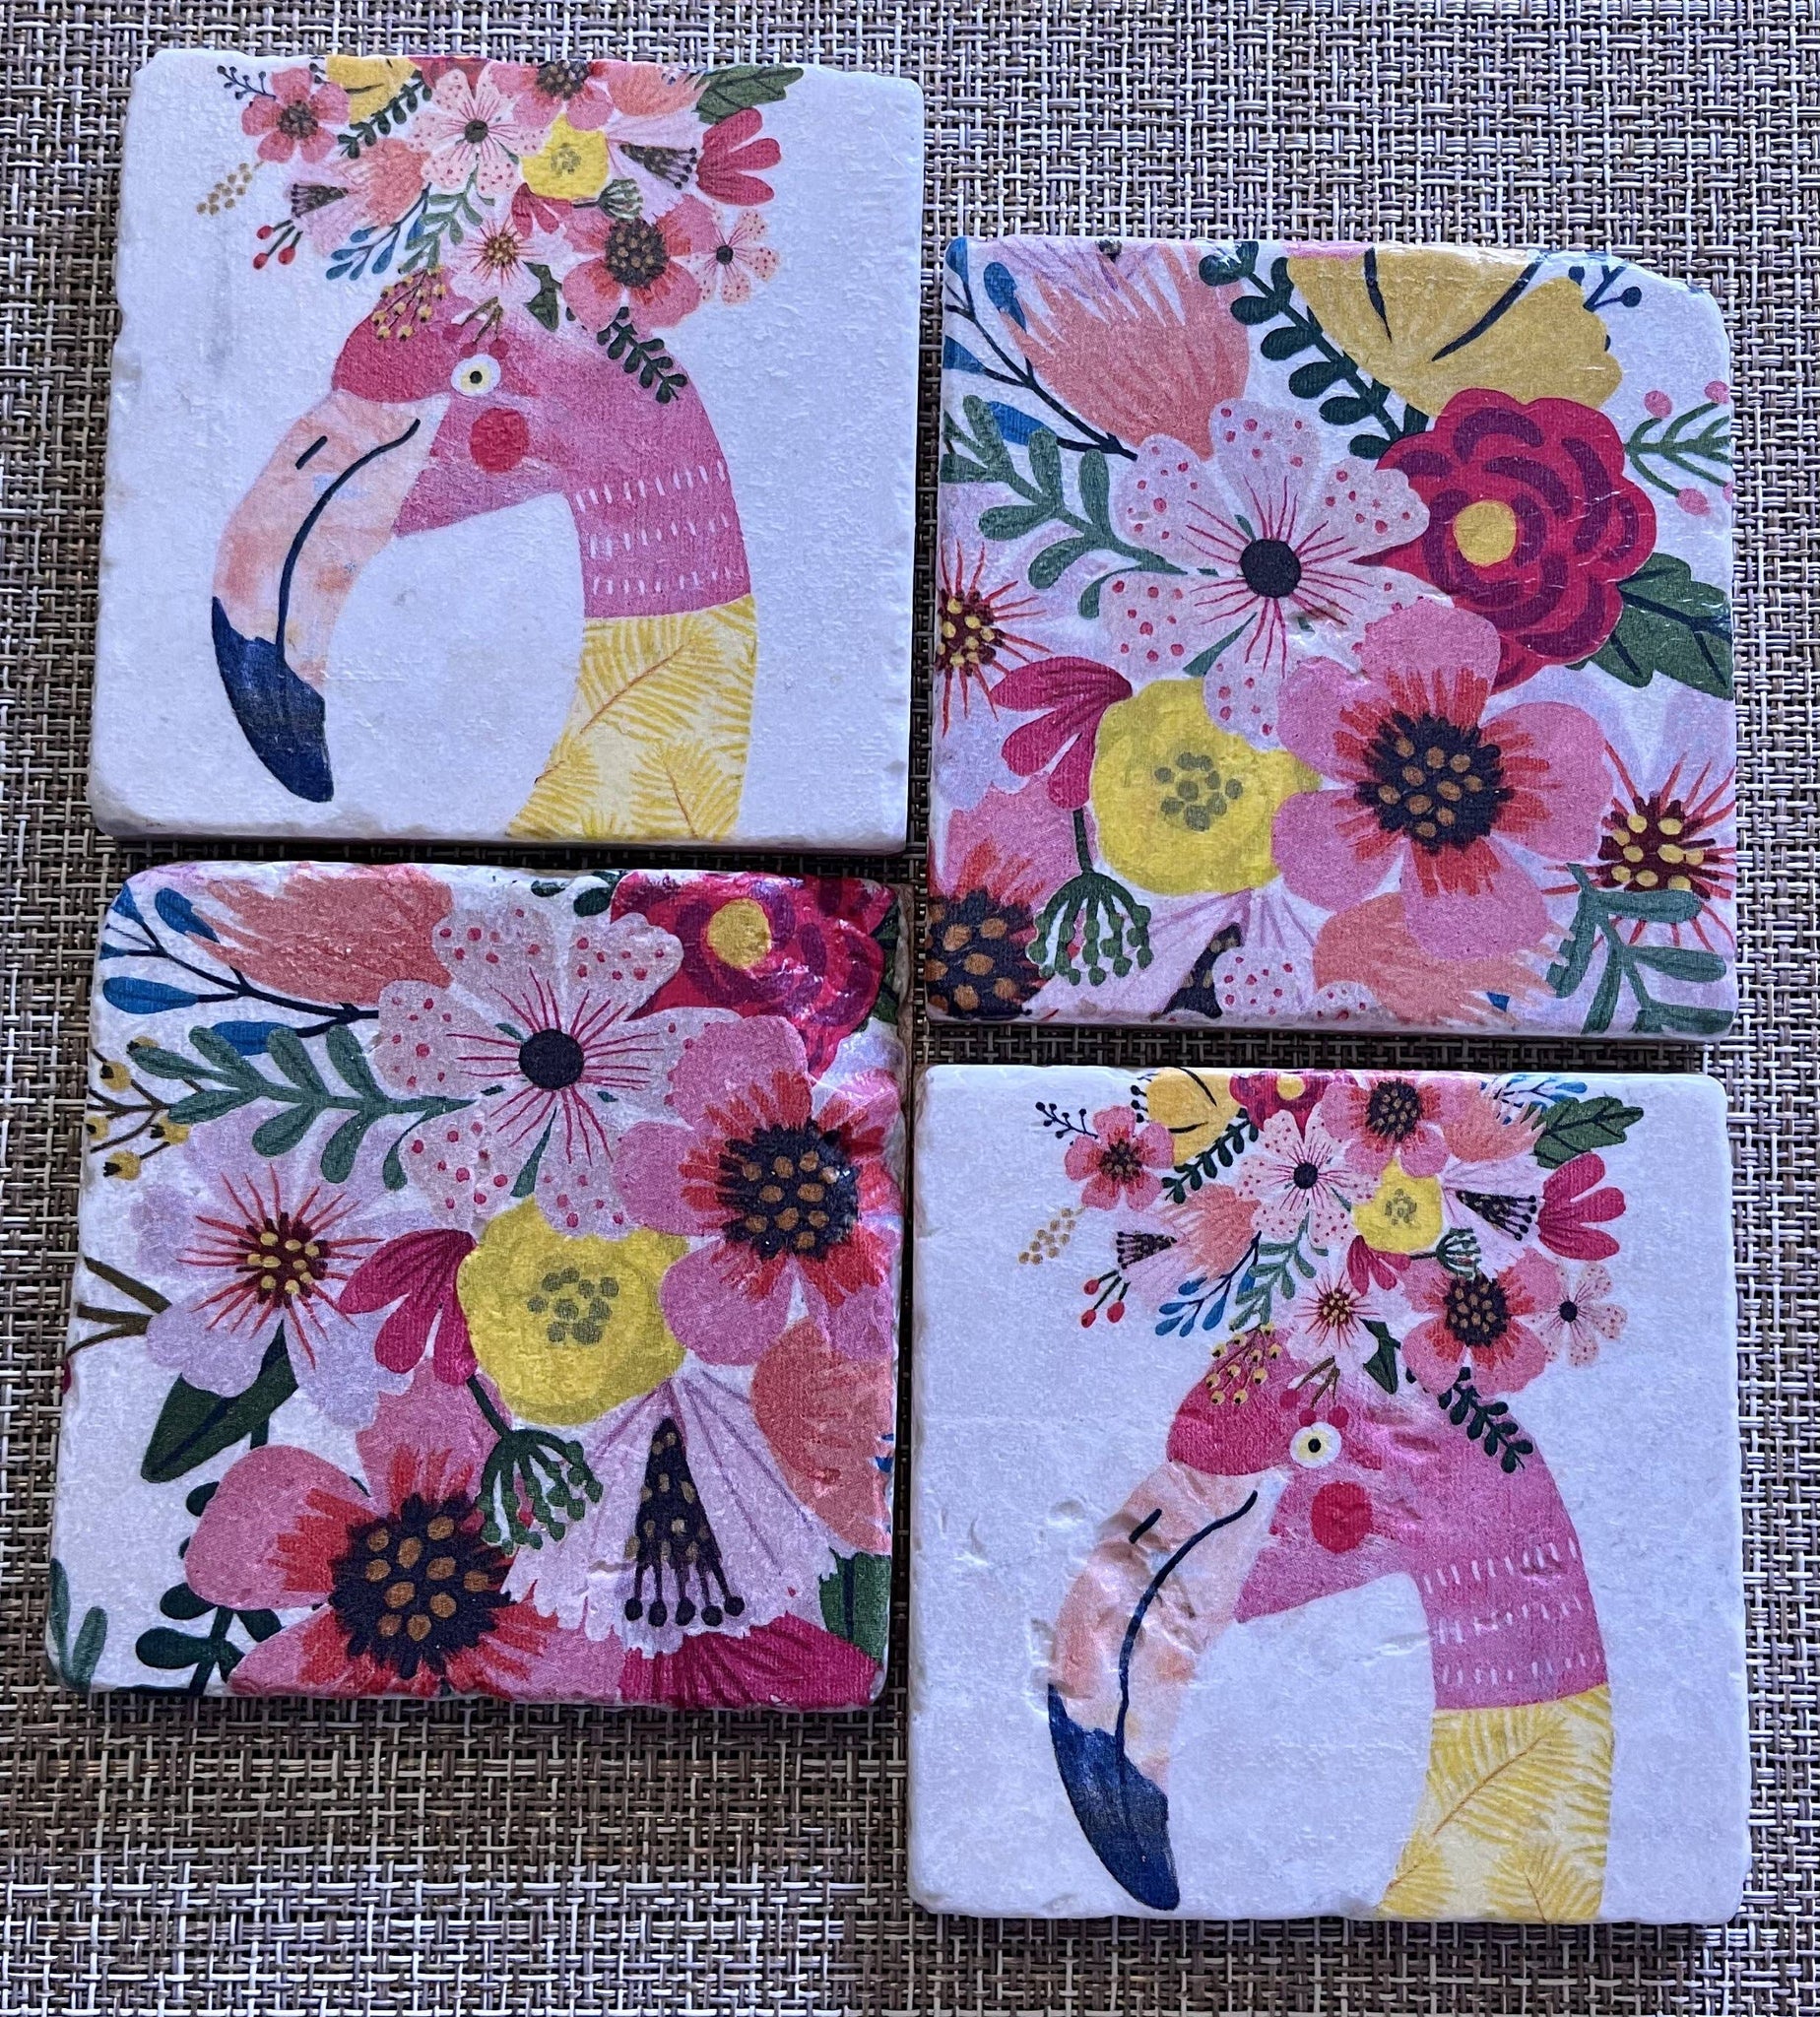 Flamingo and Flowers Coasters - Set of 4